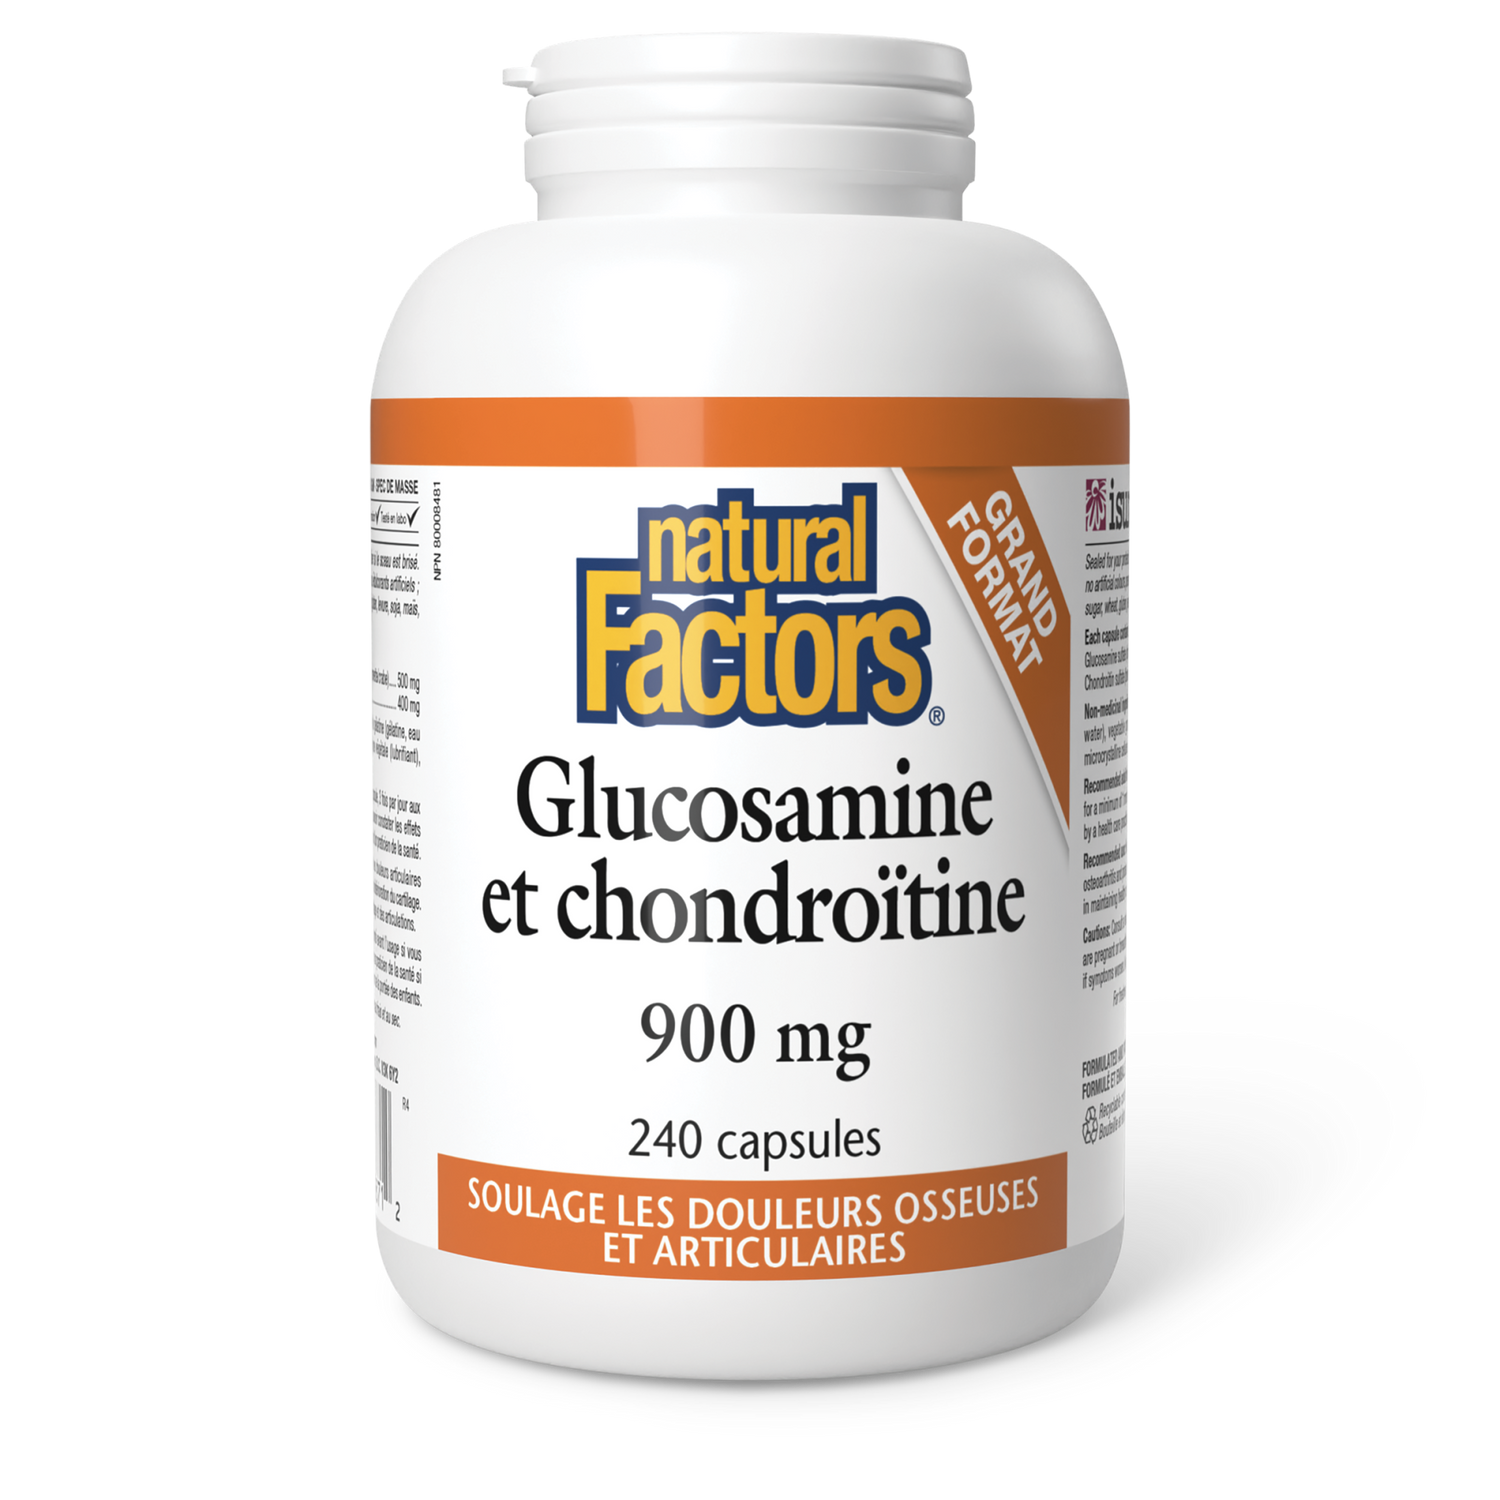 Glucosamine et chondroïtine 900 mg, Natural Factors|v|image|26871